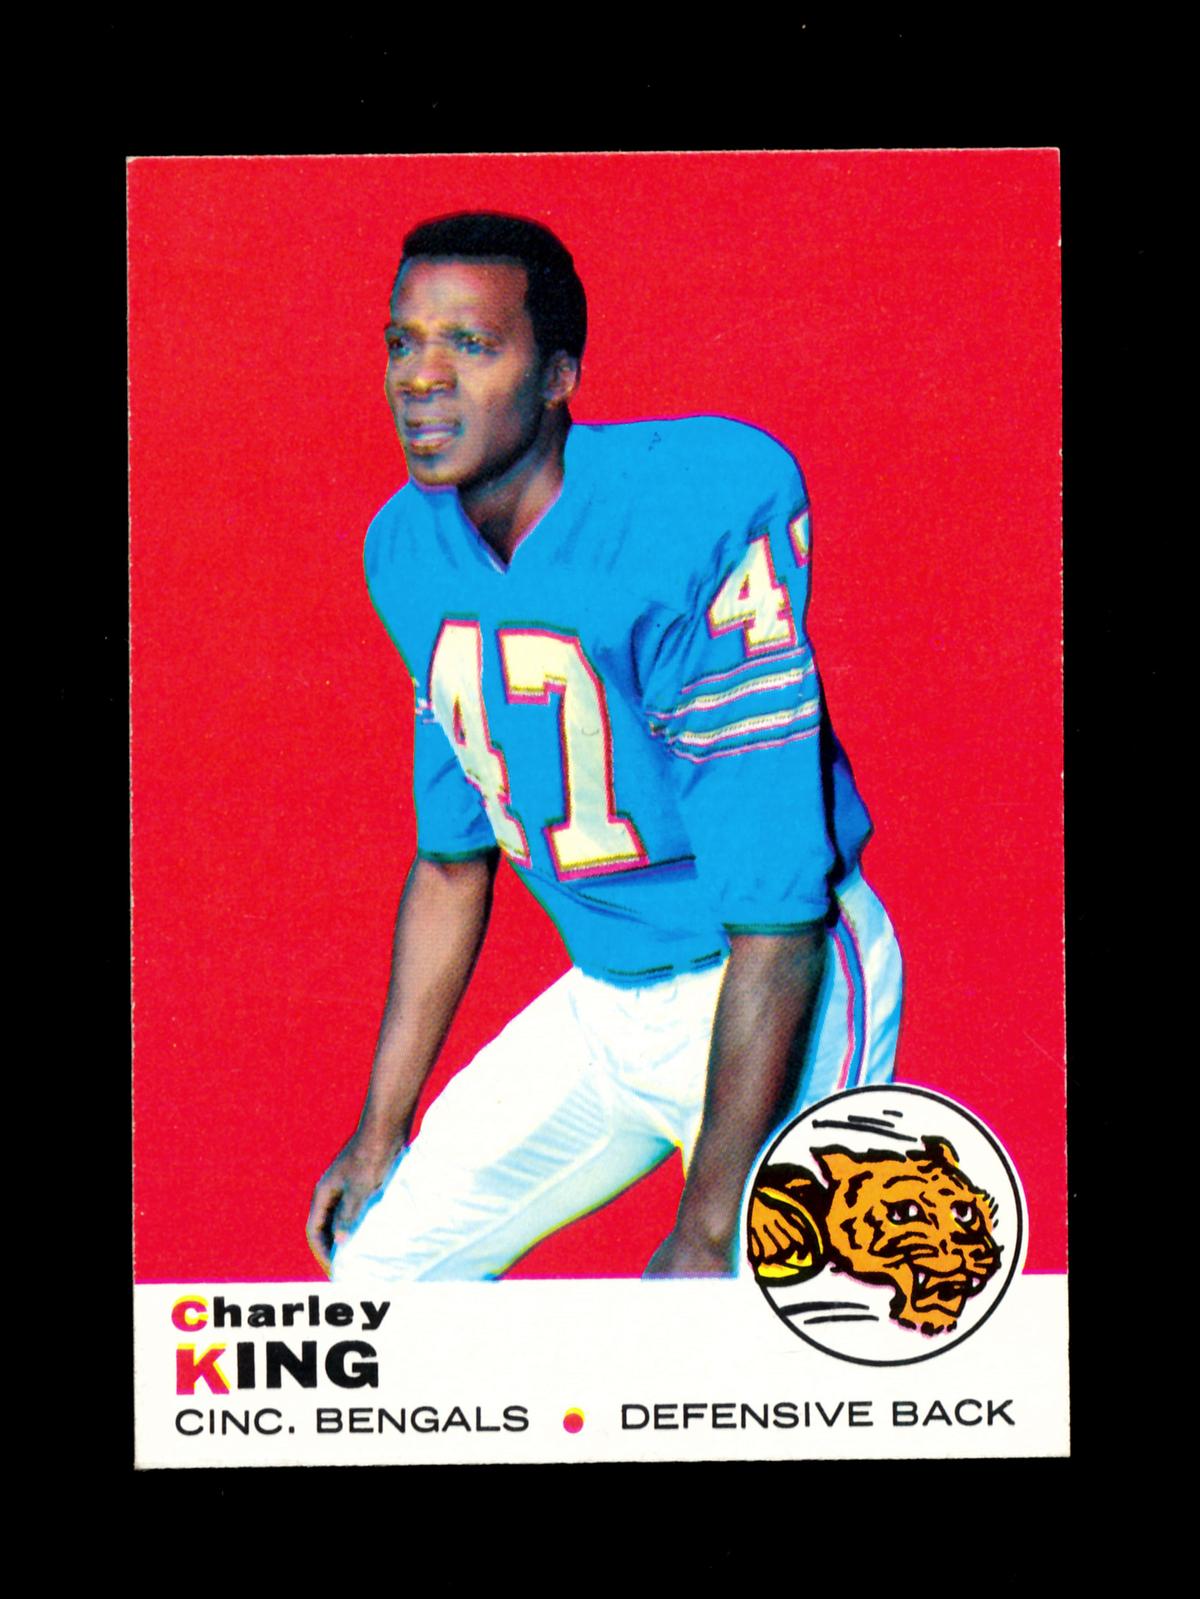 1969 Topps Football Card #79 Charley King Cincinnati Bengals. NM+ Condition